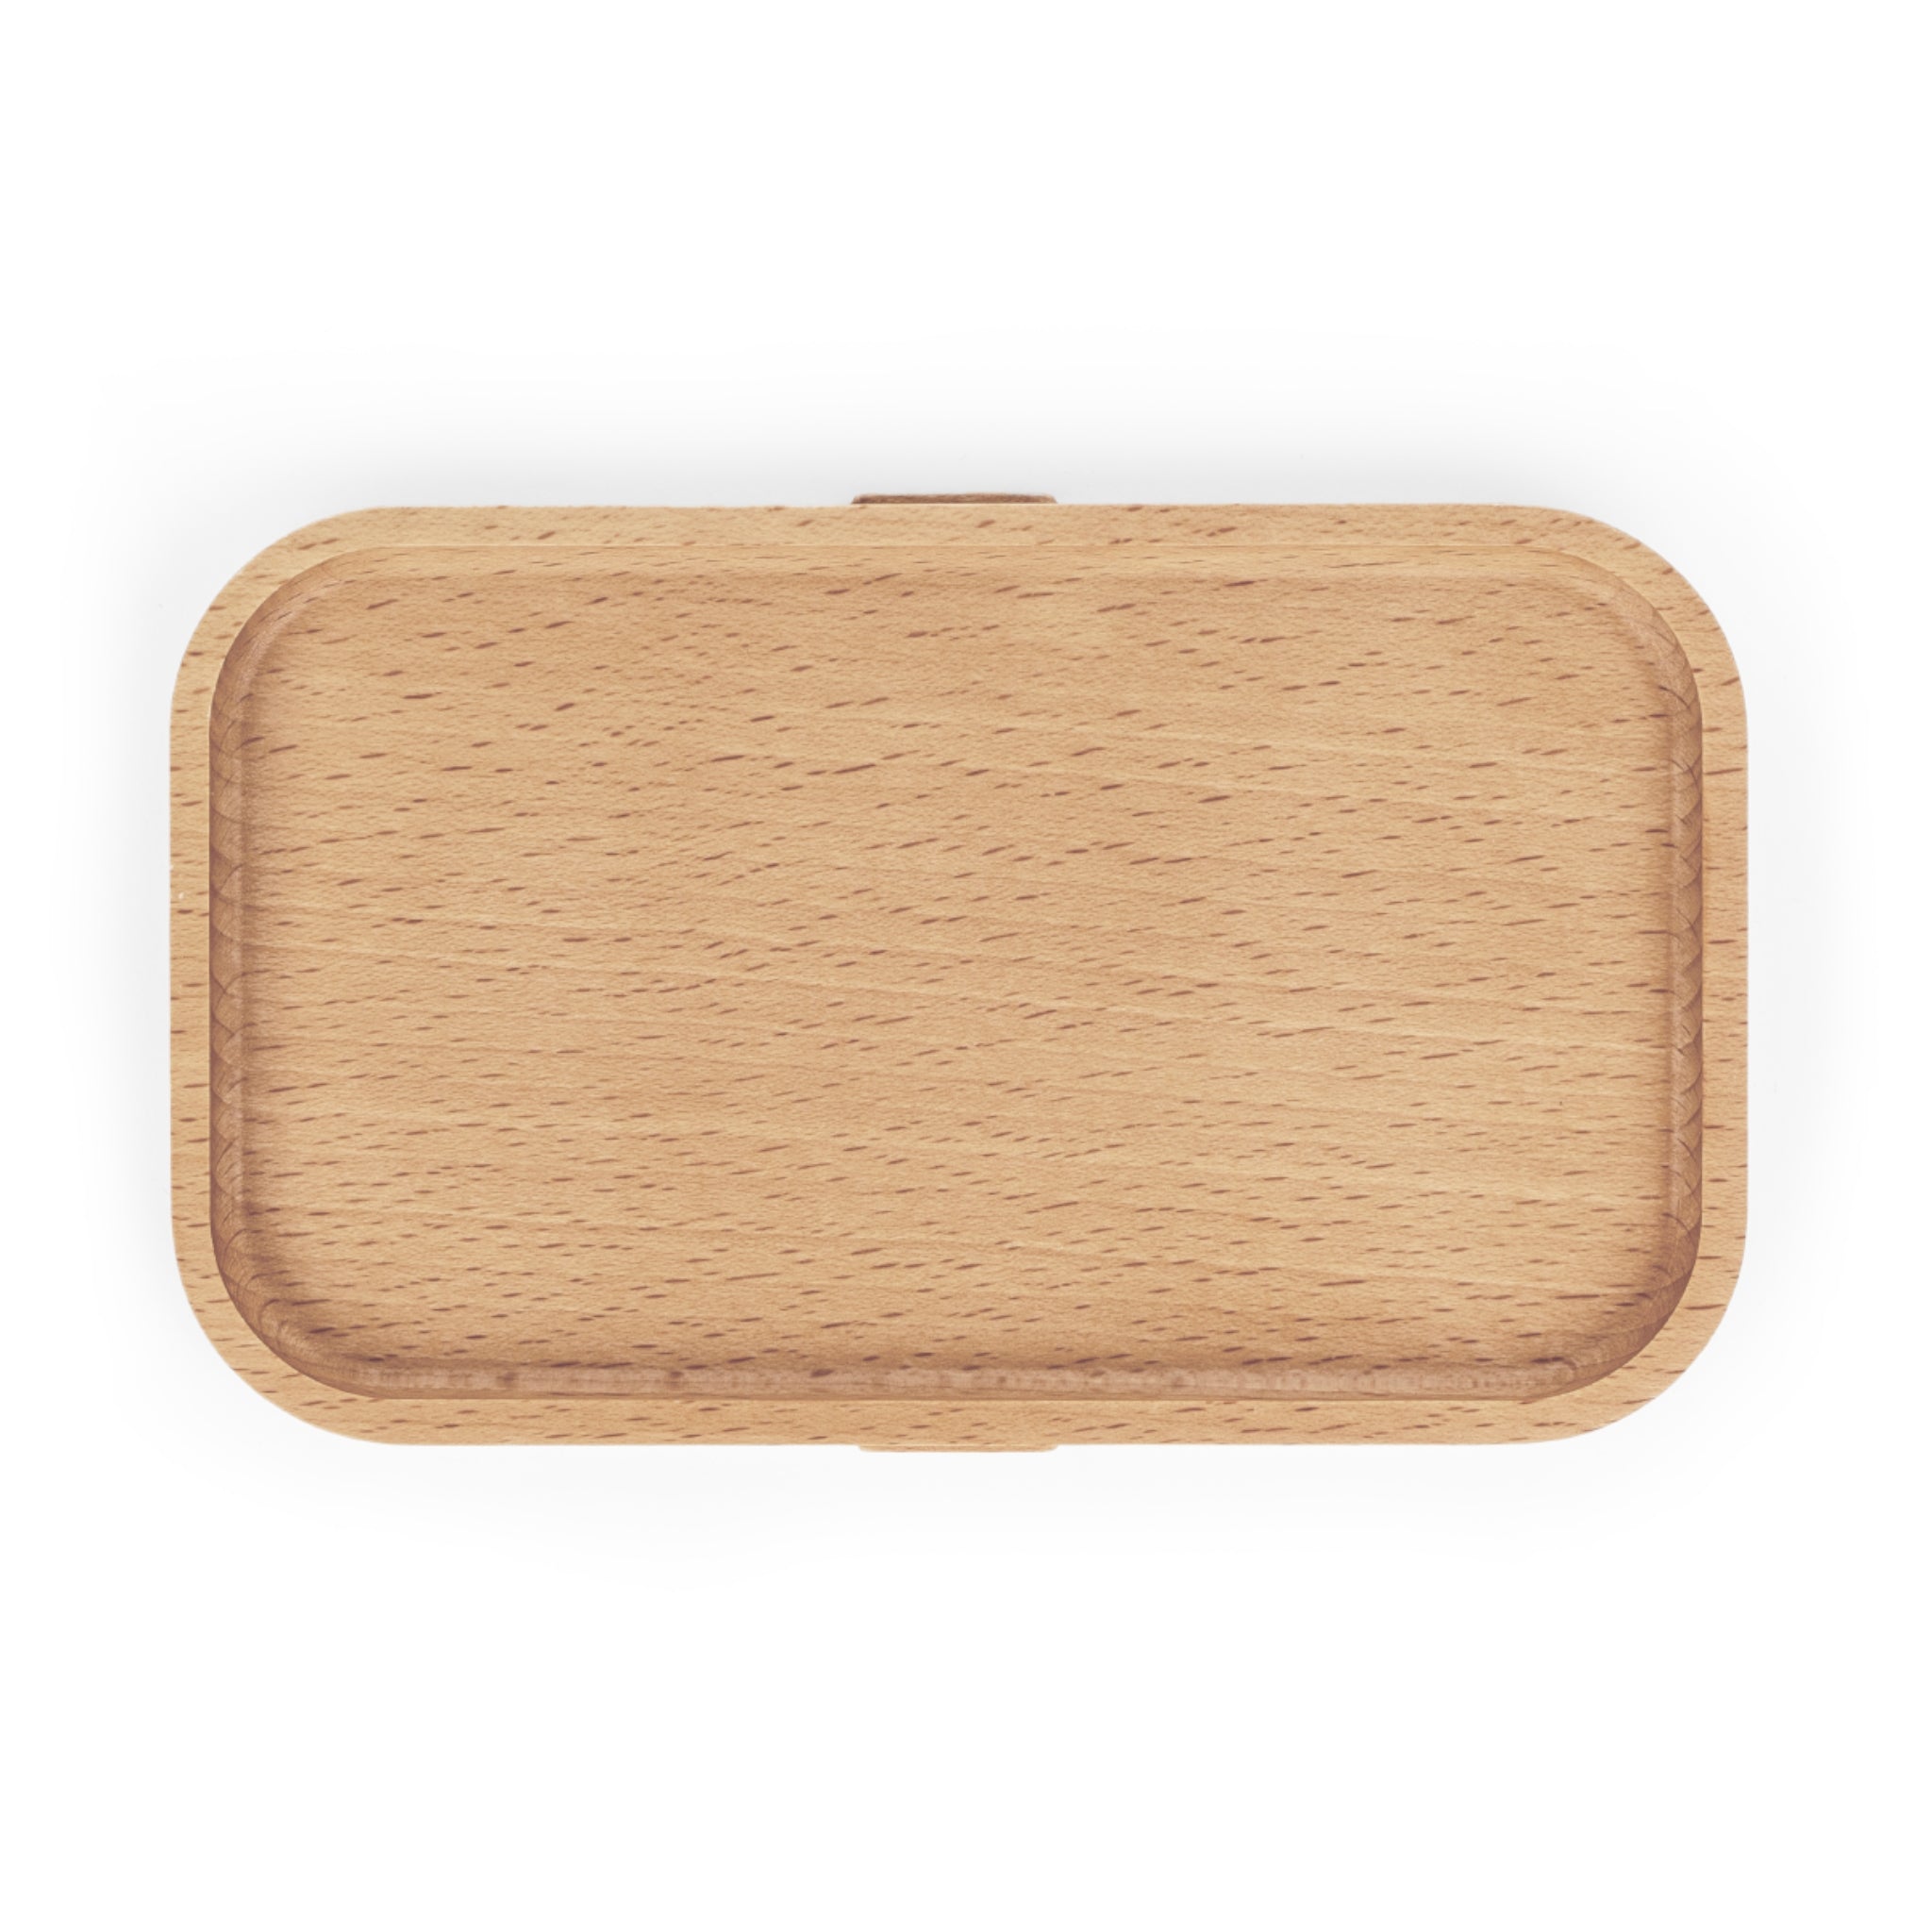 wooden lid of bento box